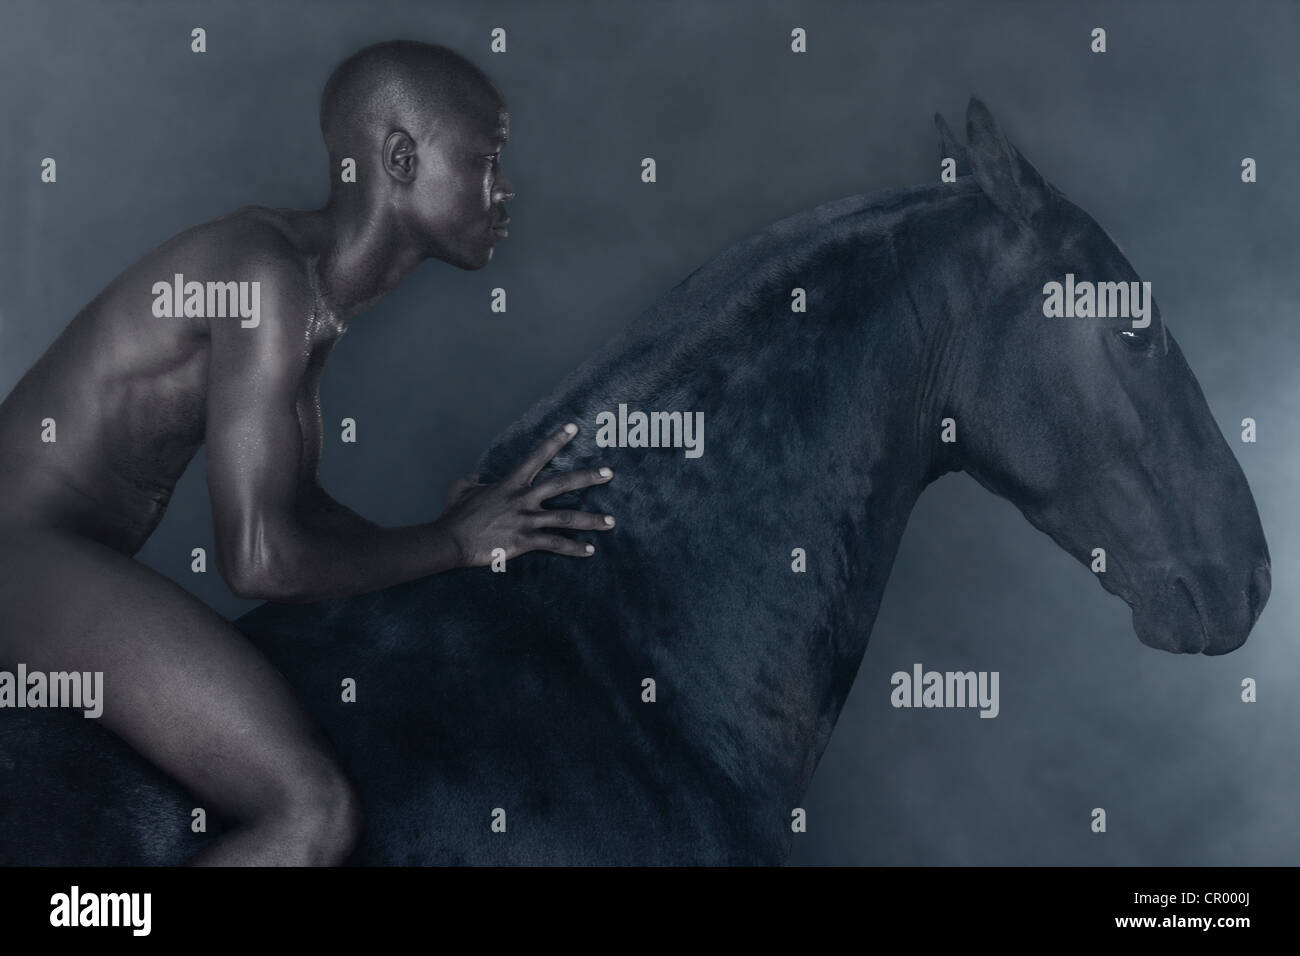 Horse photos nude man - Nude Horseback